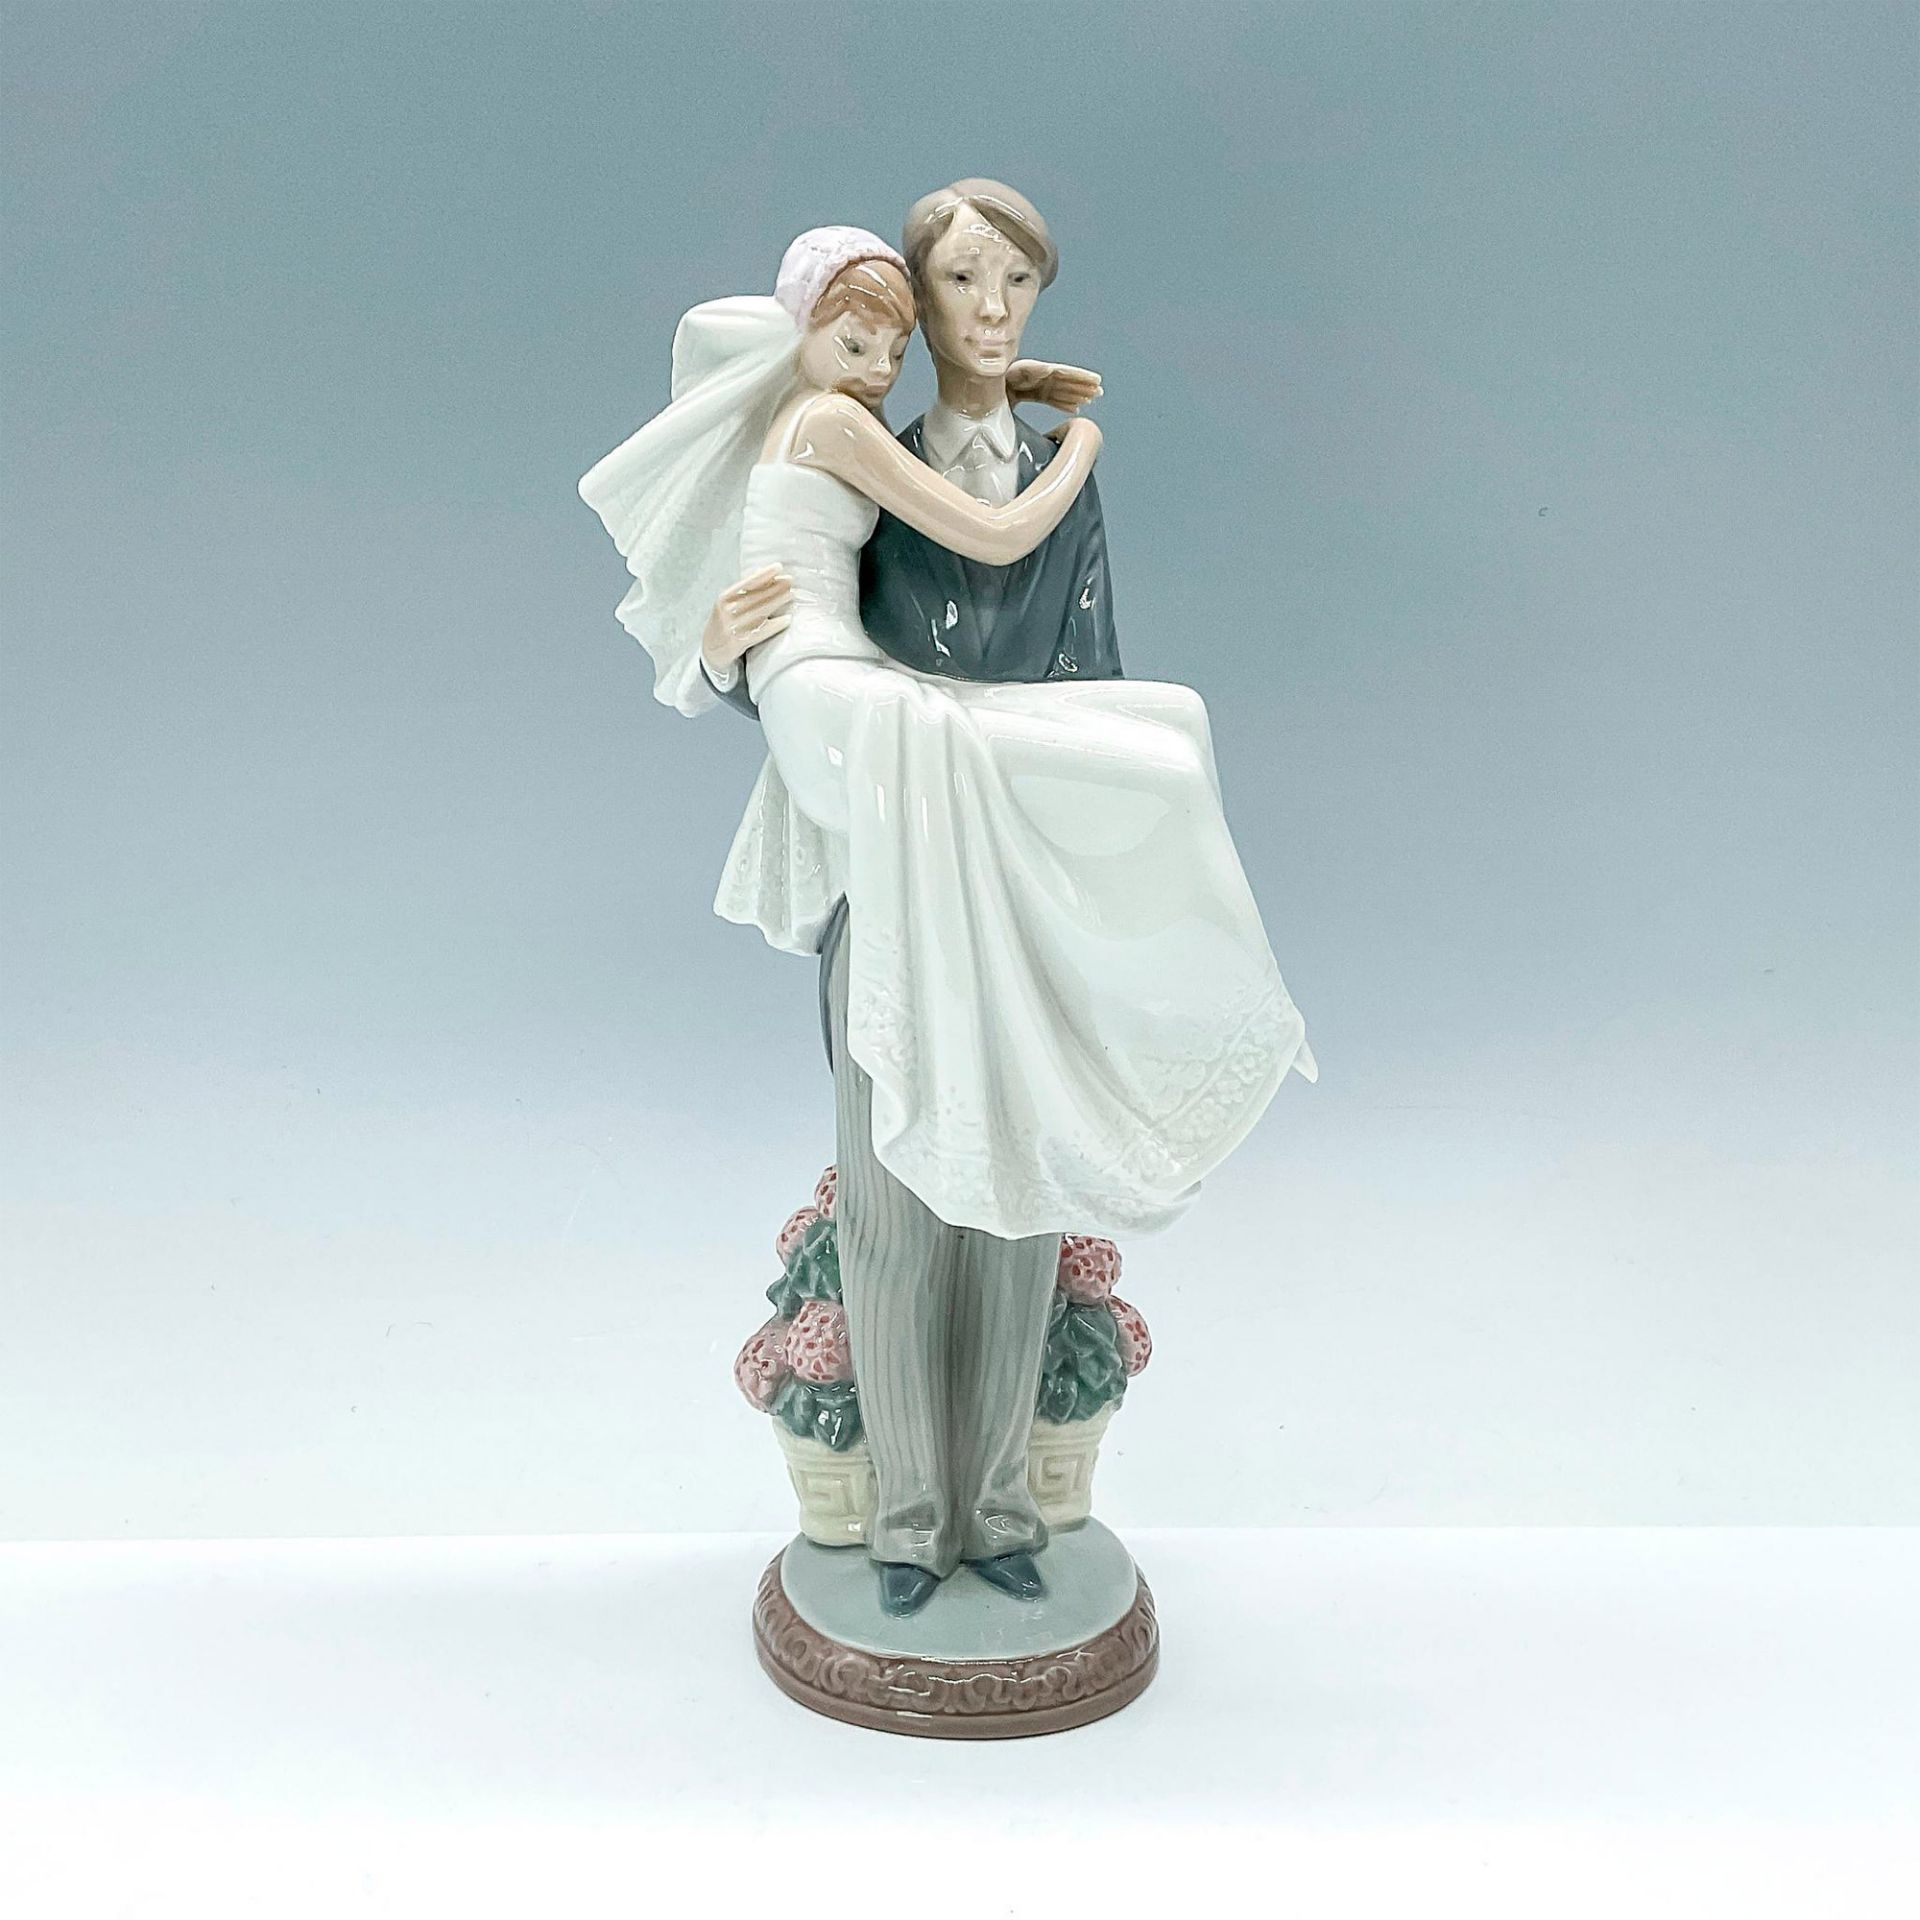 Over the Threshold 1005282 - Lladro Porcelain Figurine